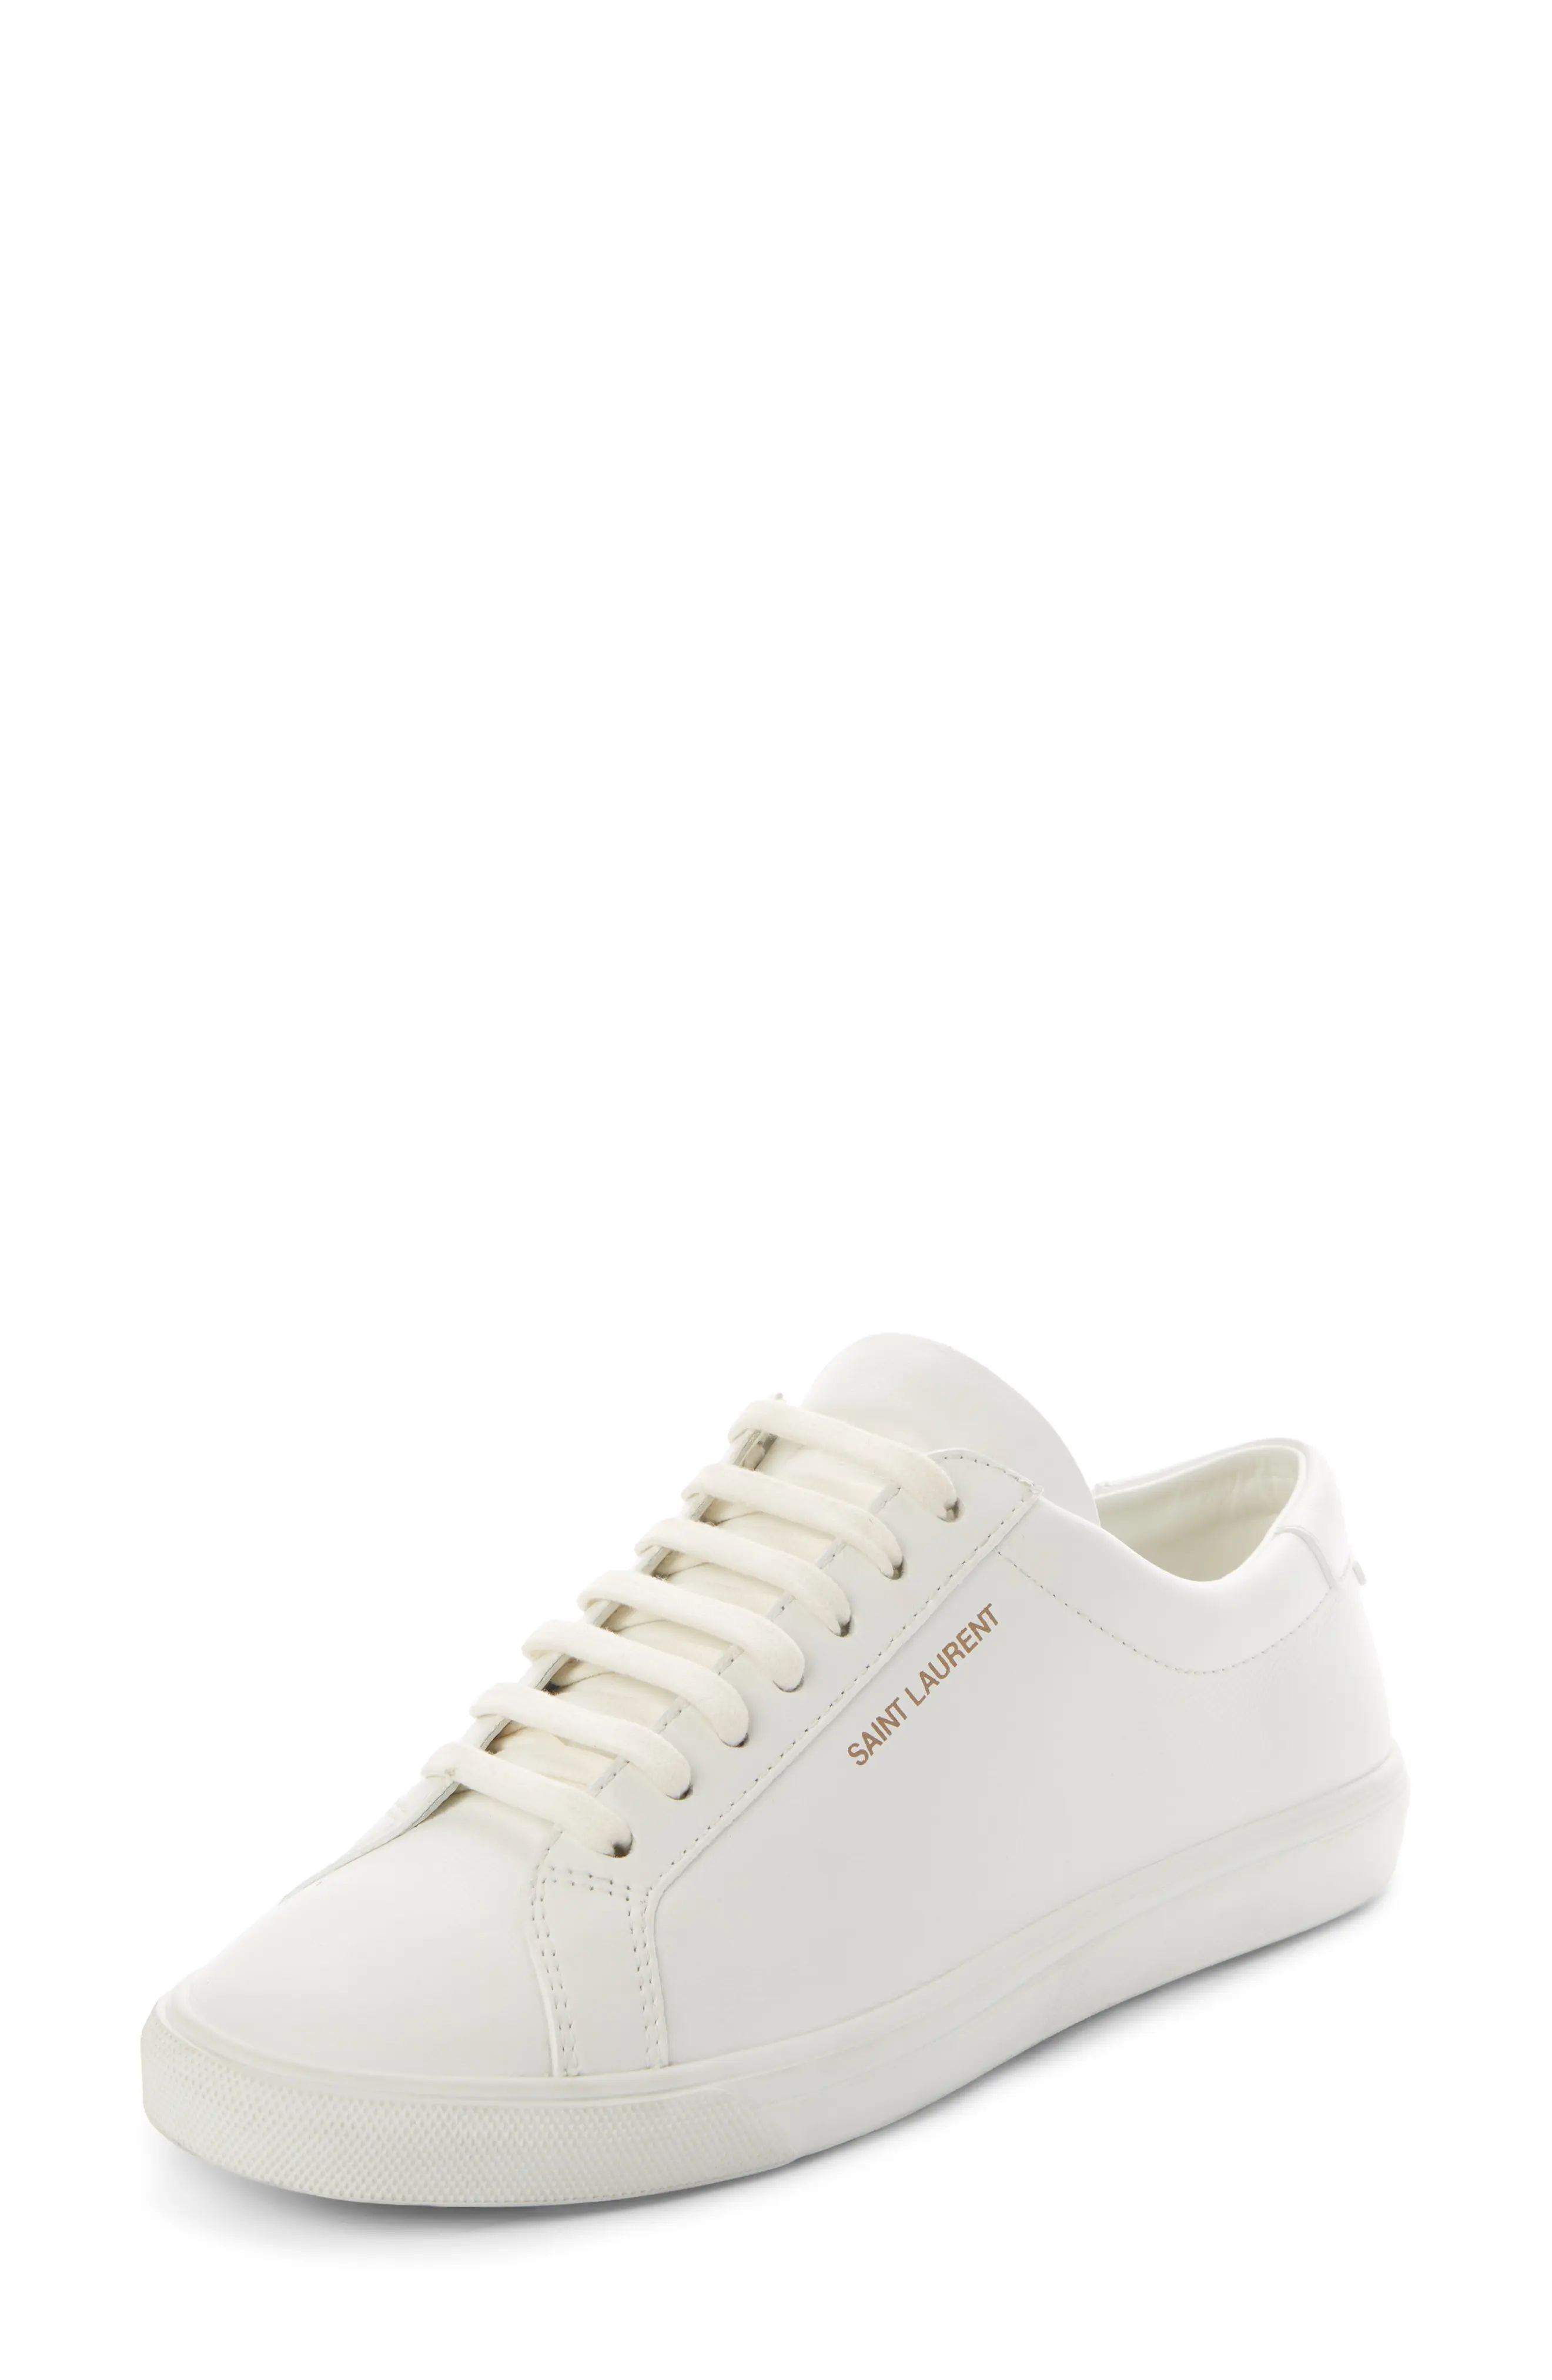 Women's Saint Laurent Andy Low Top Sneaker, Size 6.5US - White | Nordstrom